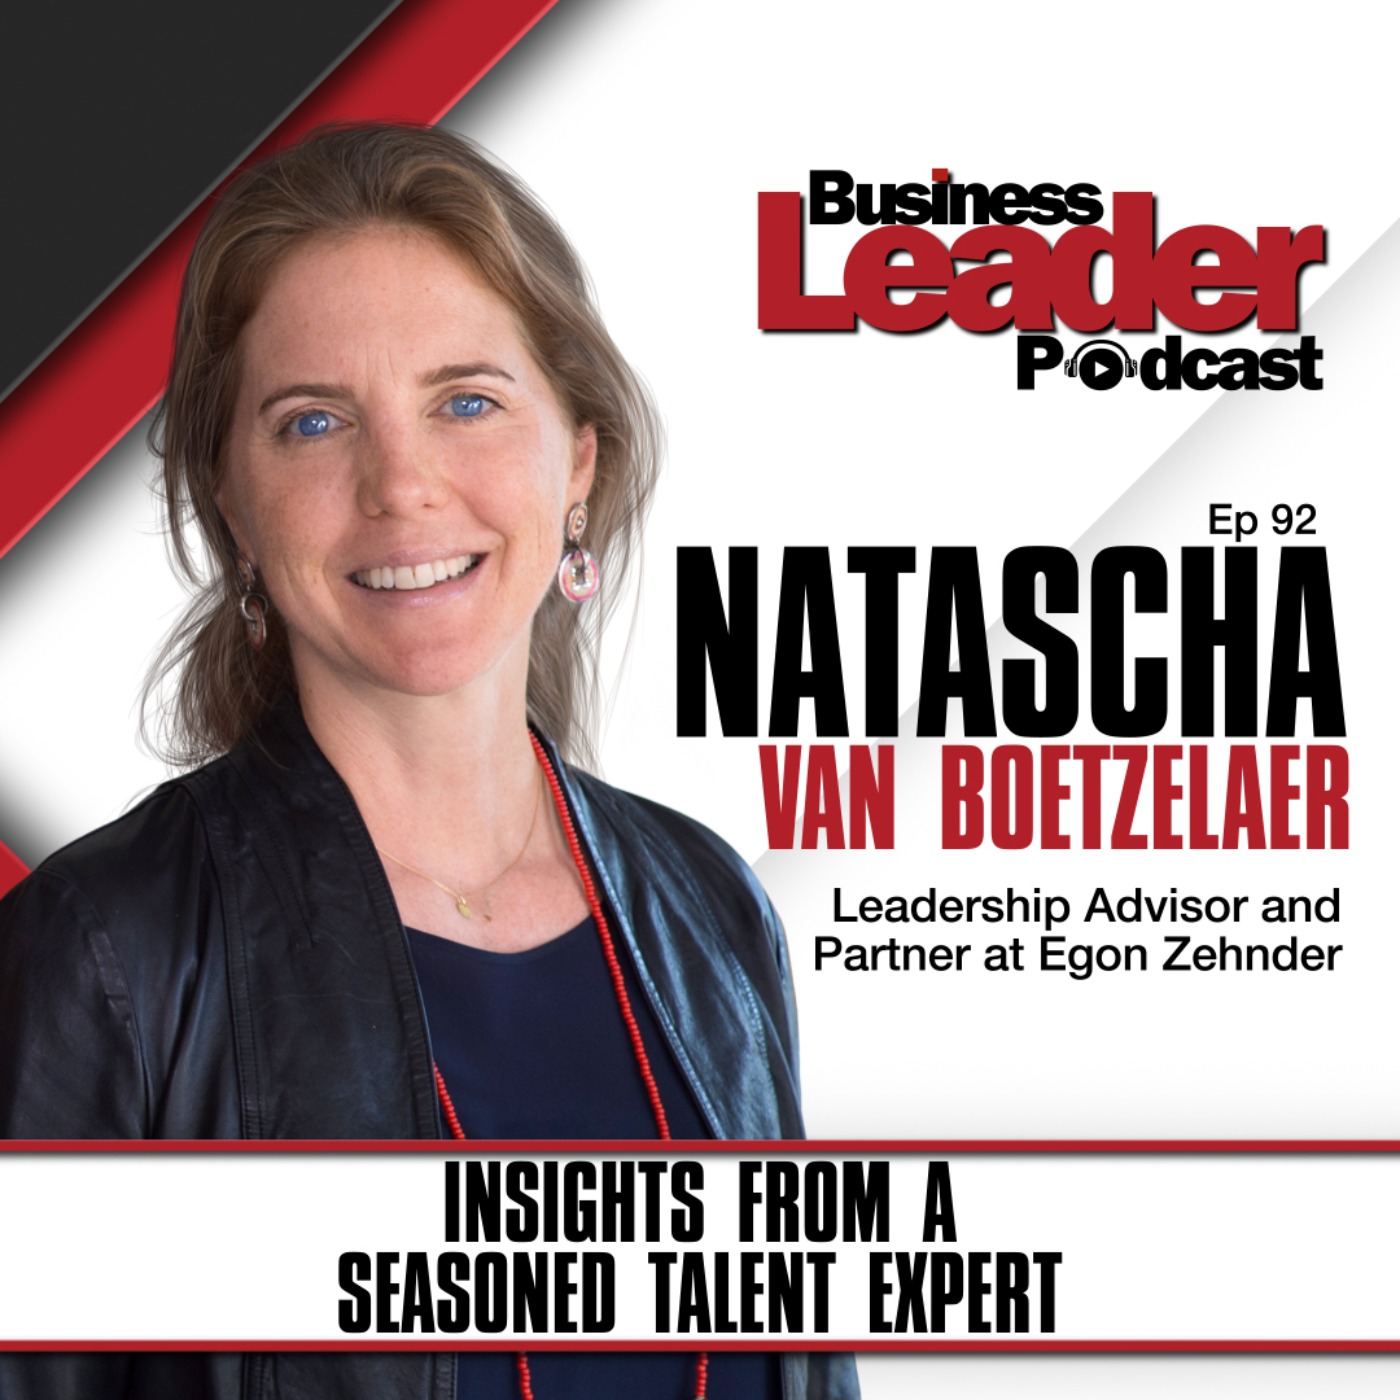 Natascha van Boetzelaer: Insights from a seasoned talent expert